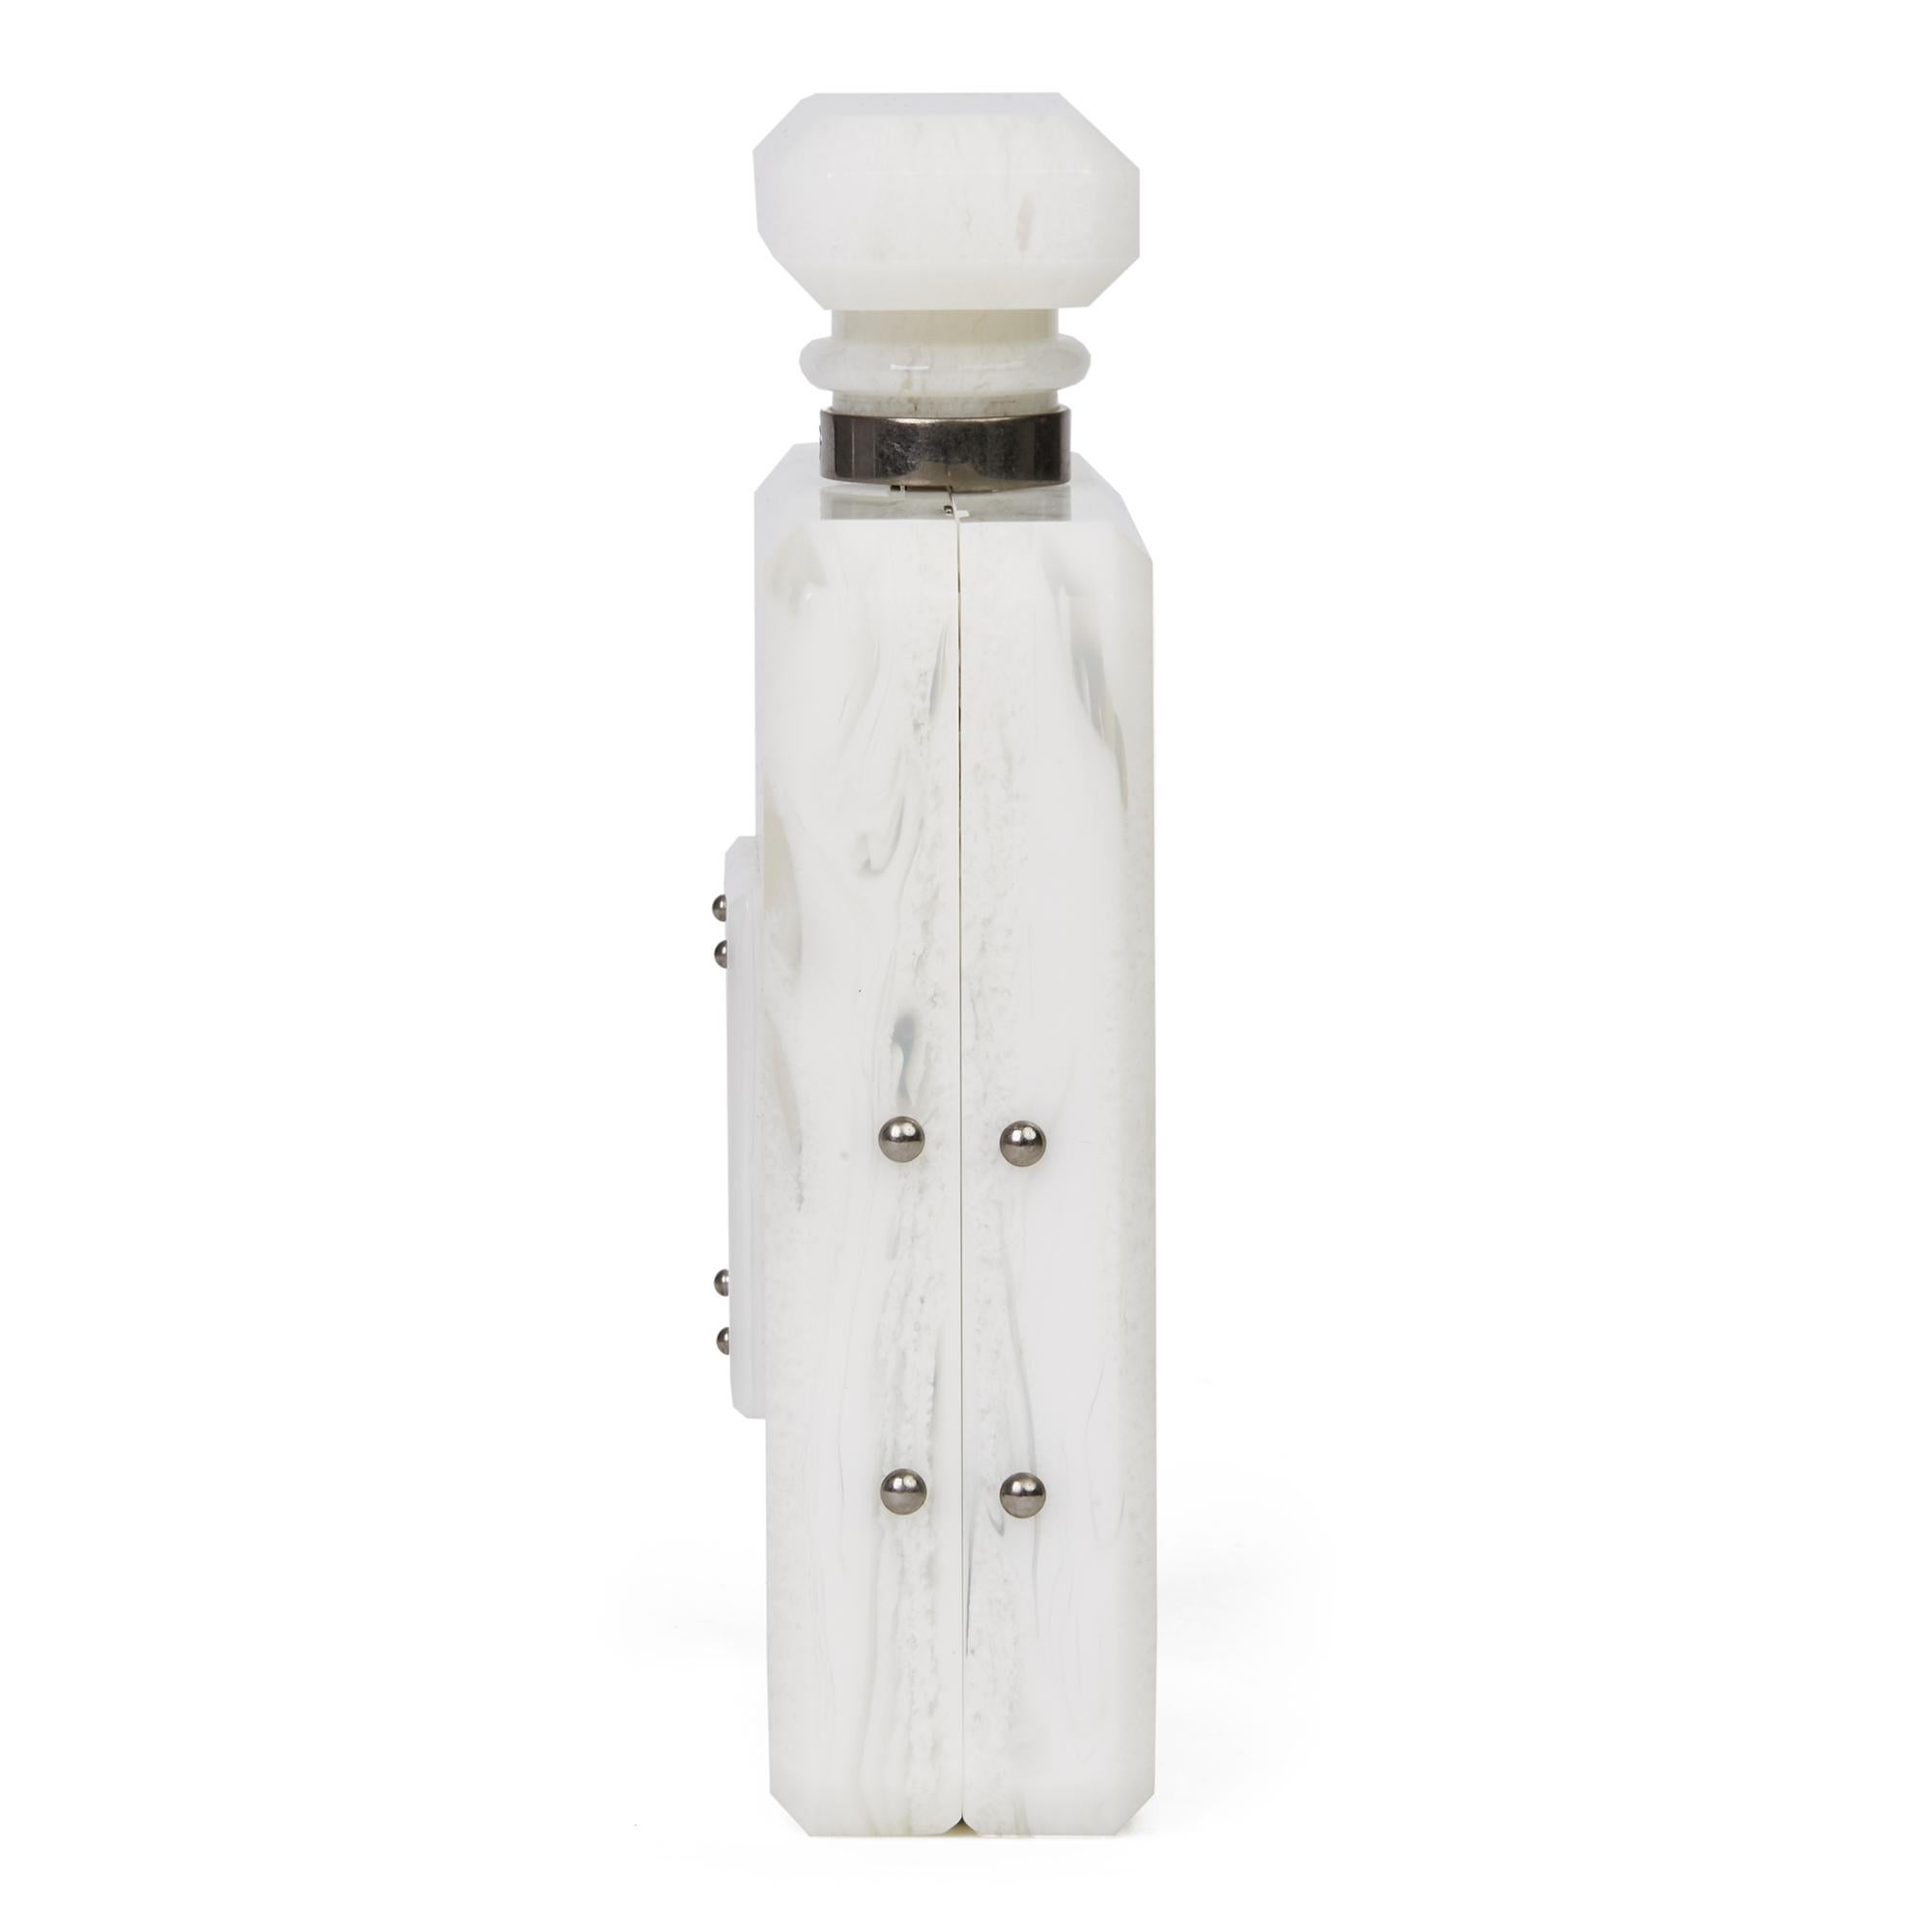 chanel perfume bottle bag